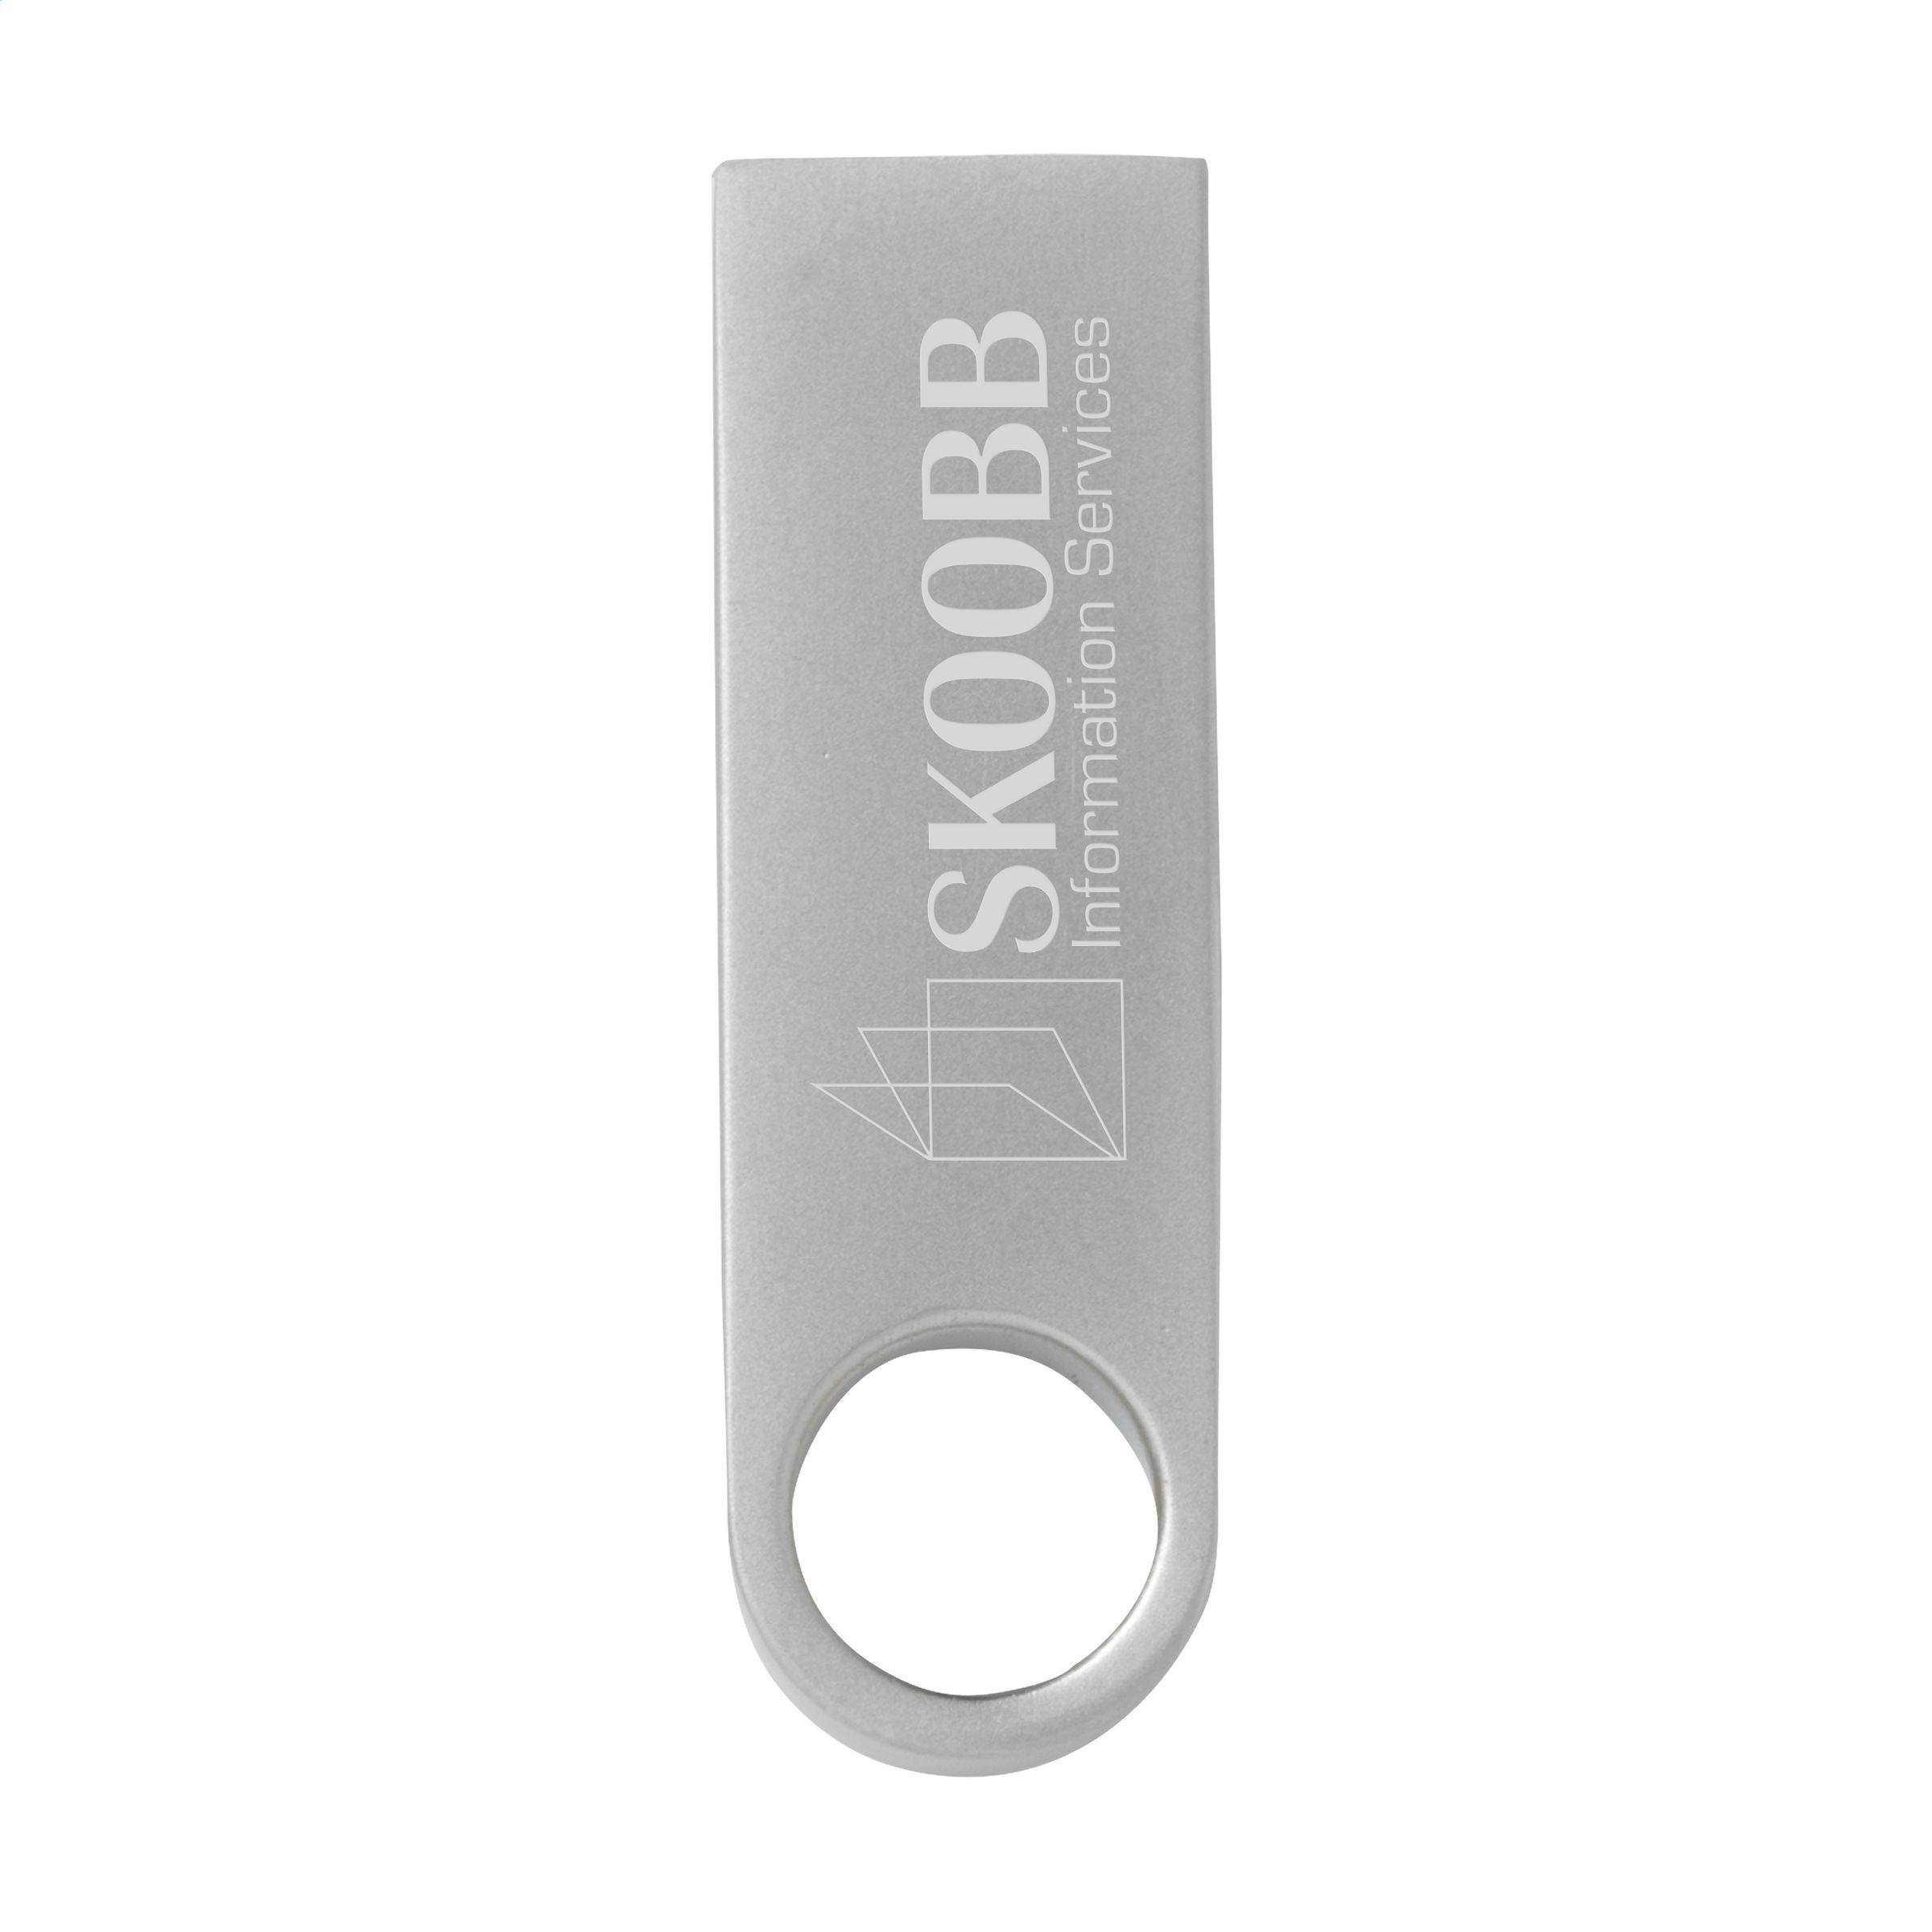 Silberstahl USB - Eching